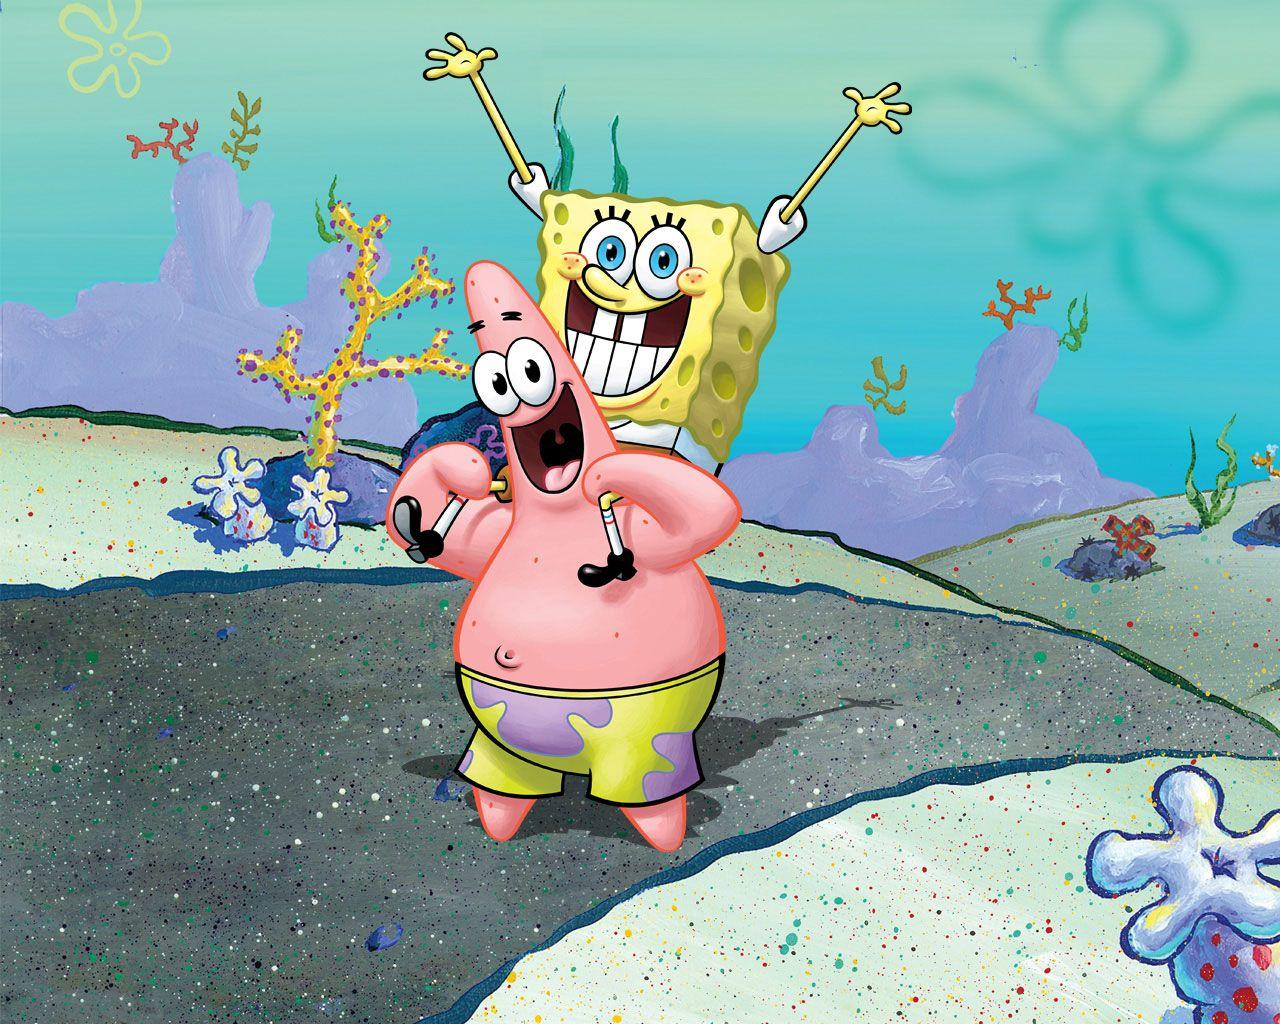 Spongebob And Patrick. Encyclopedia